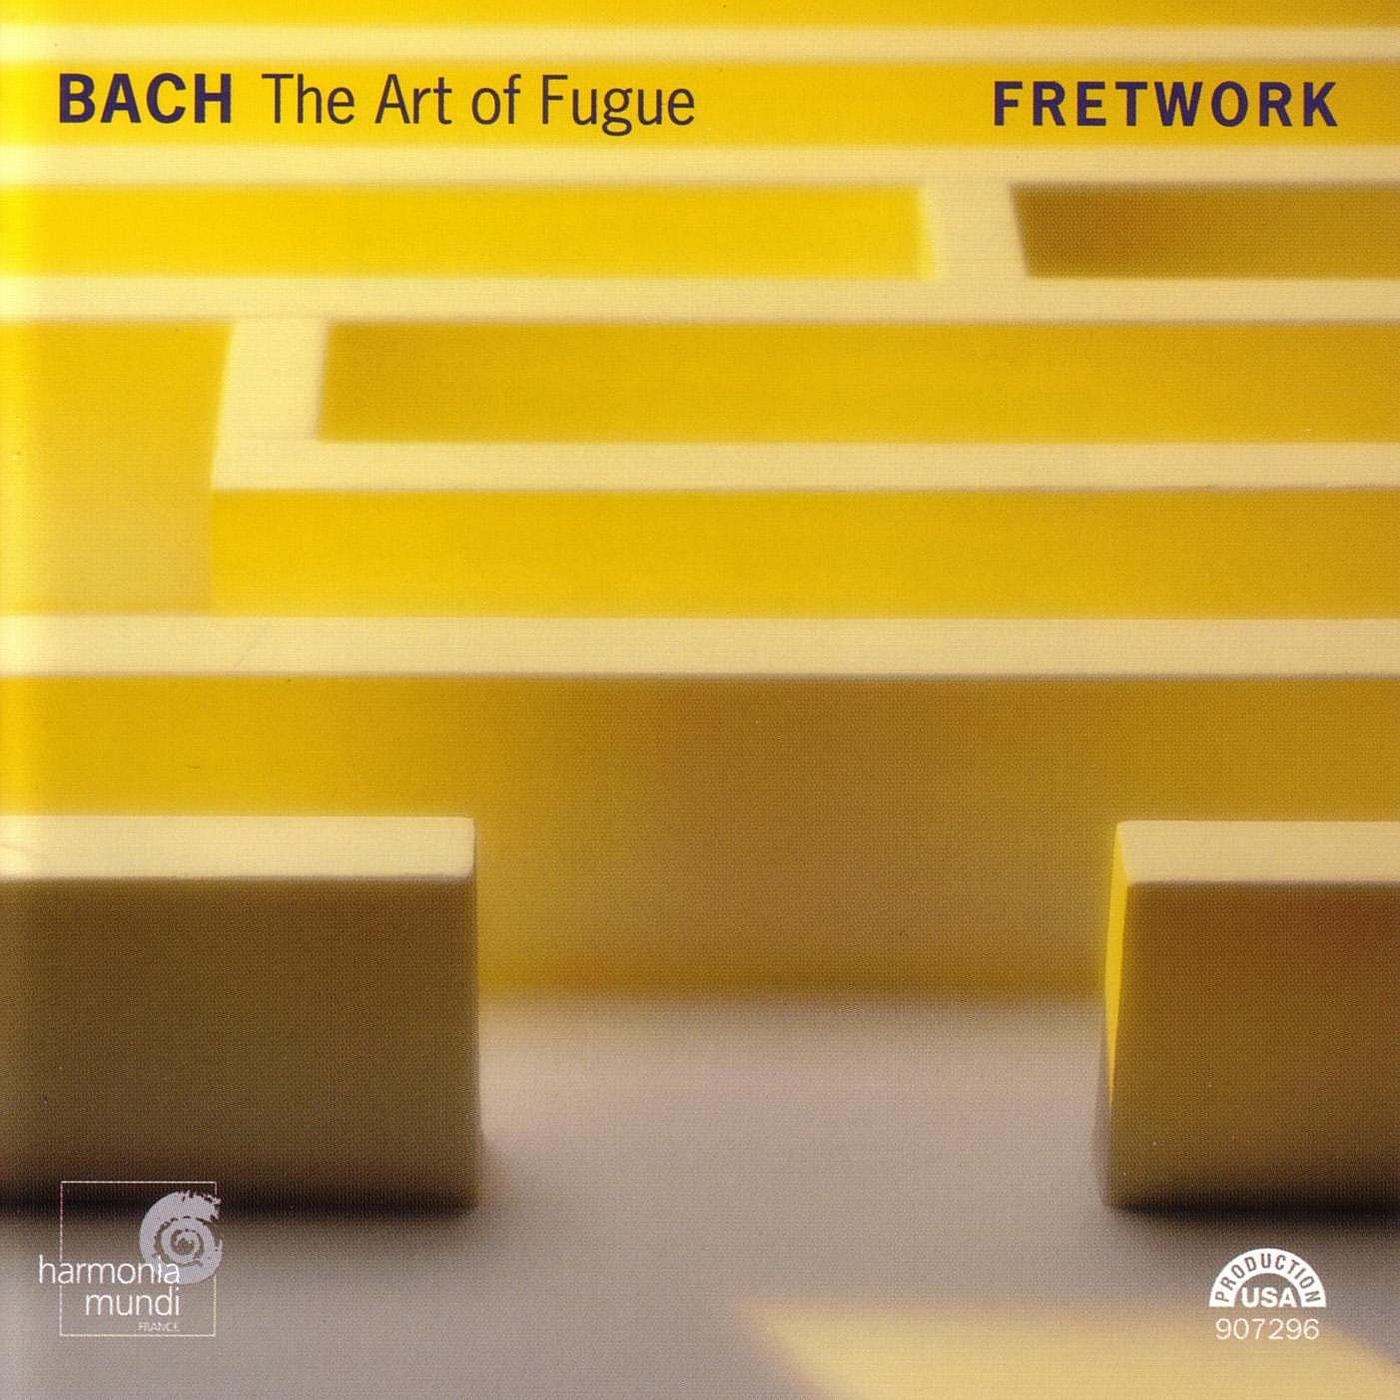 The Art of Fugue, BWV 1080: Contrapunctus 4